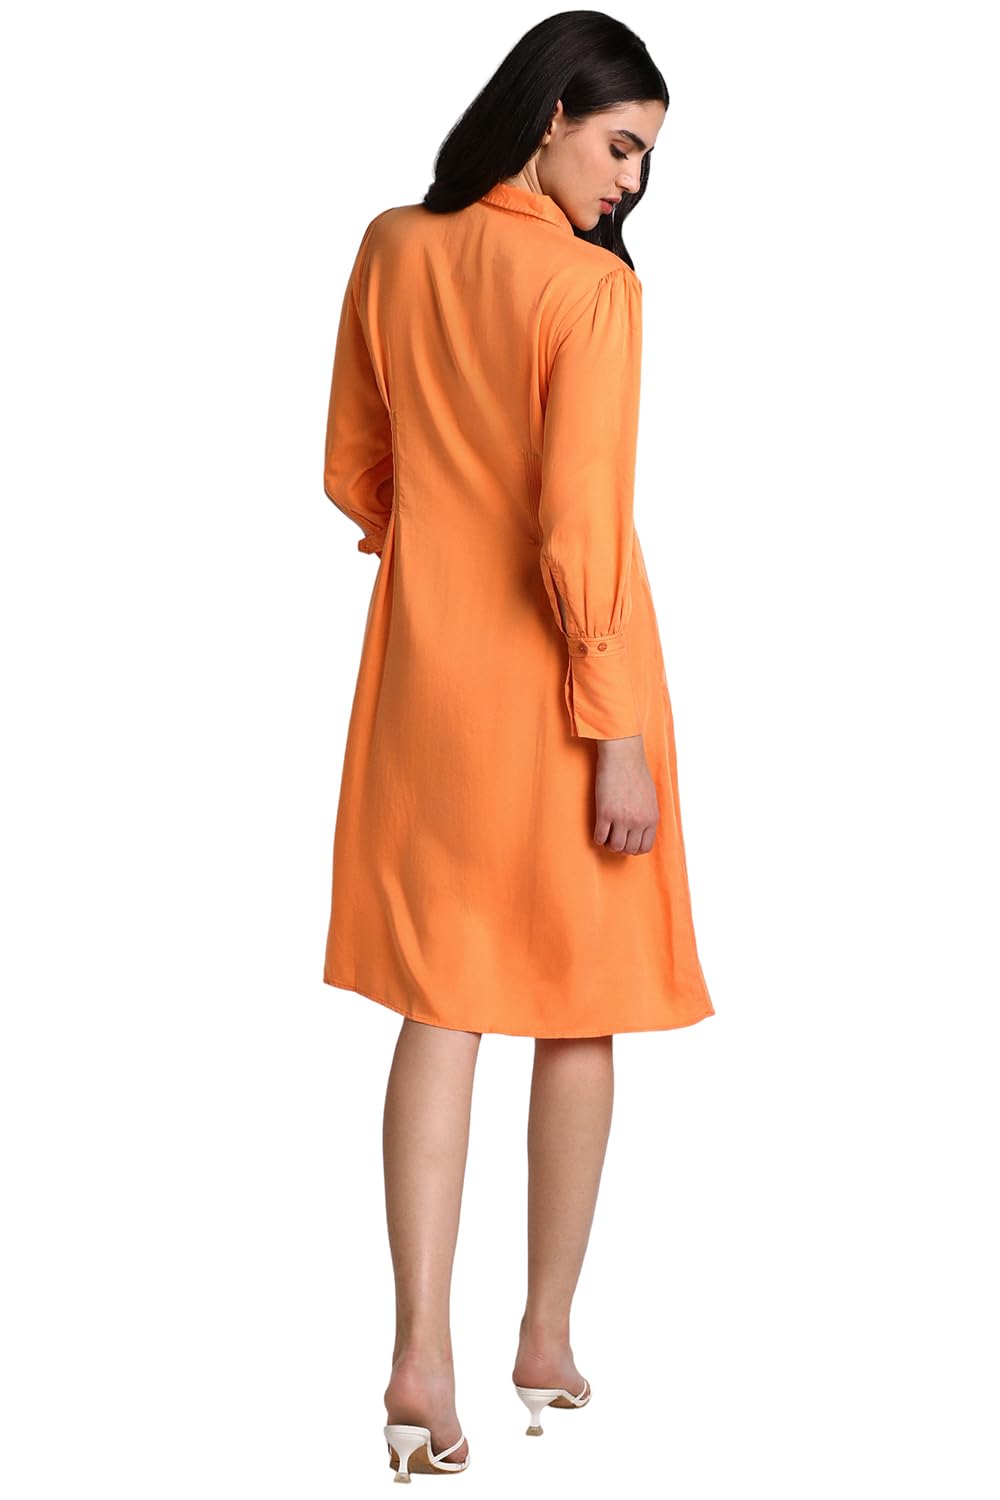 Buy Women Black Print Casual Dress Online - 251155 | Allen Solly